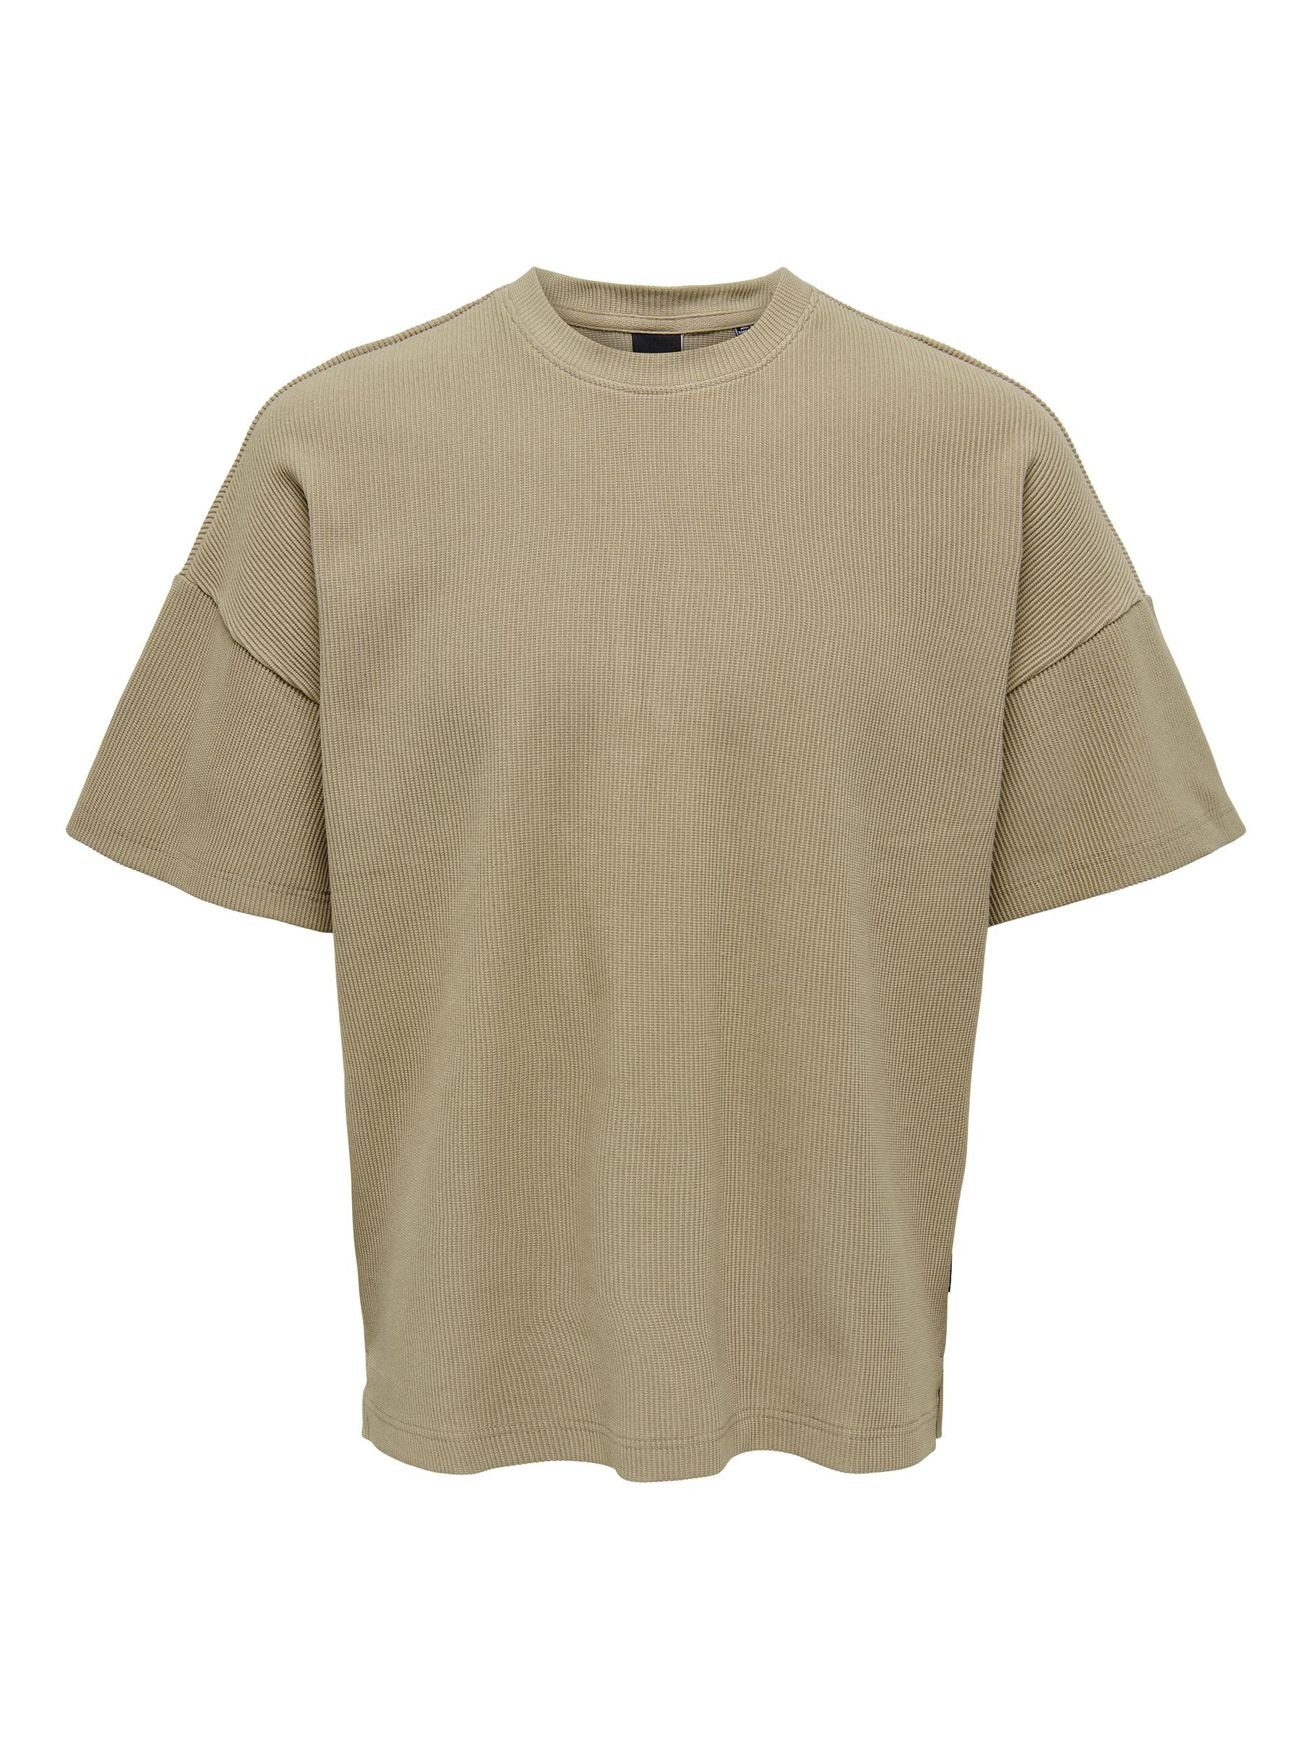 ONLY & SONS T-Shirt Weites Shirt Basic Kurzarm T-Shirt Beige 4791 Rundhals ONSBERKELEY in